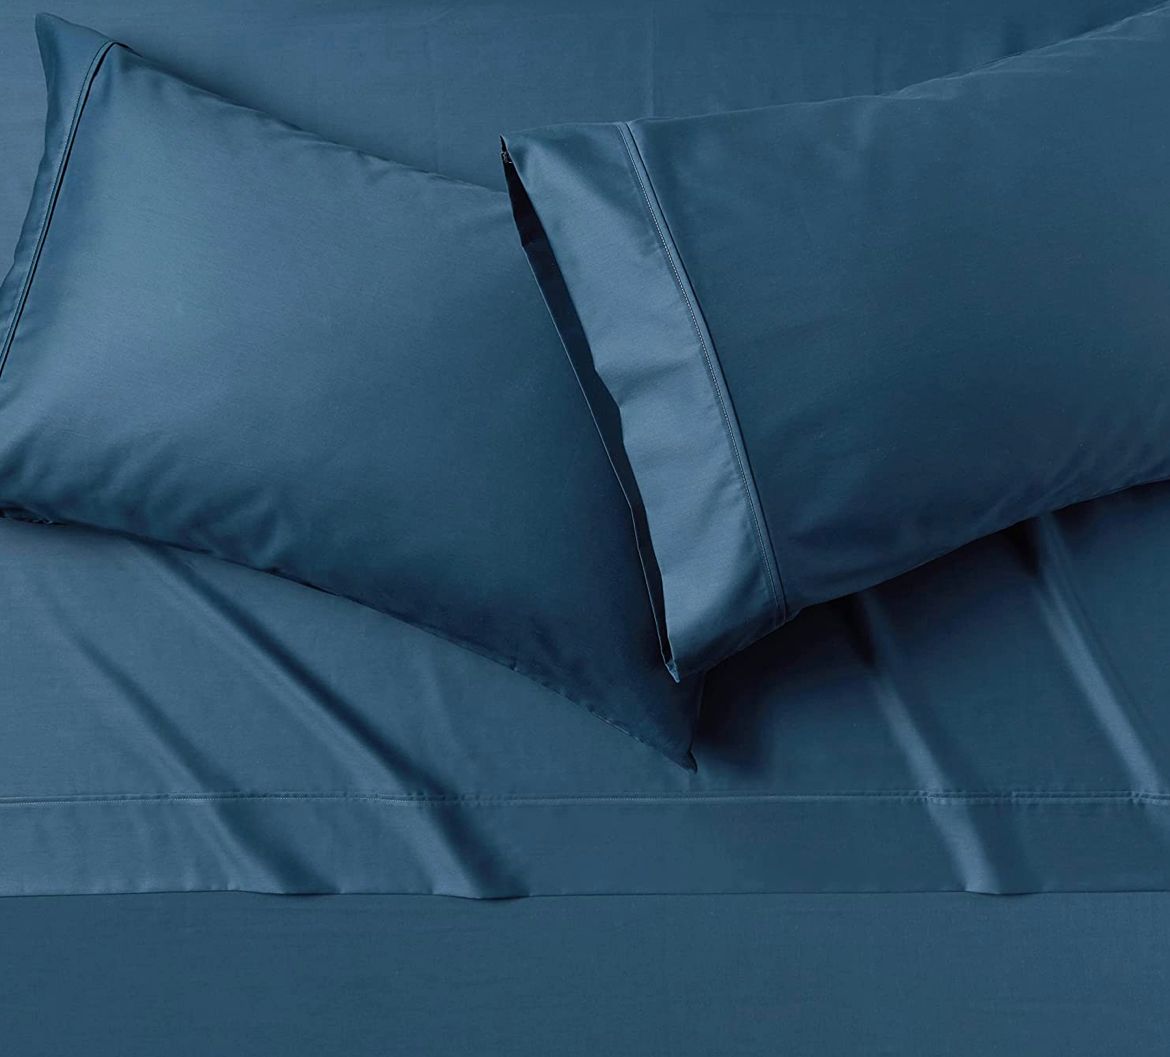 Pack de dos sábanas bajeras de algodón con banda elástica Color azul pálido  - RESERVED - 4042V-05X